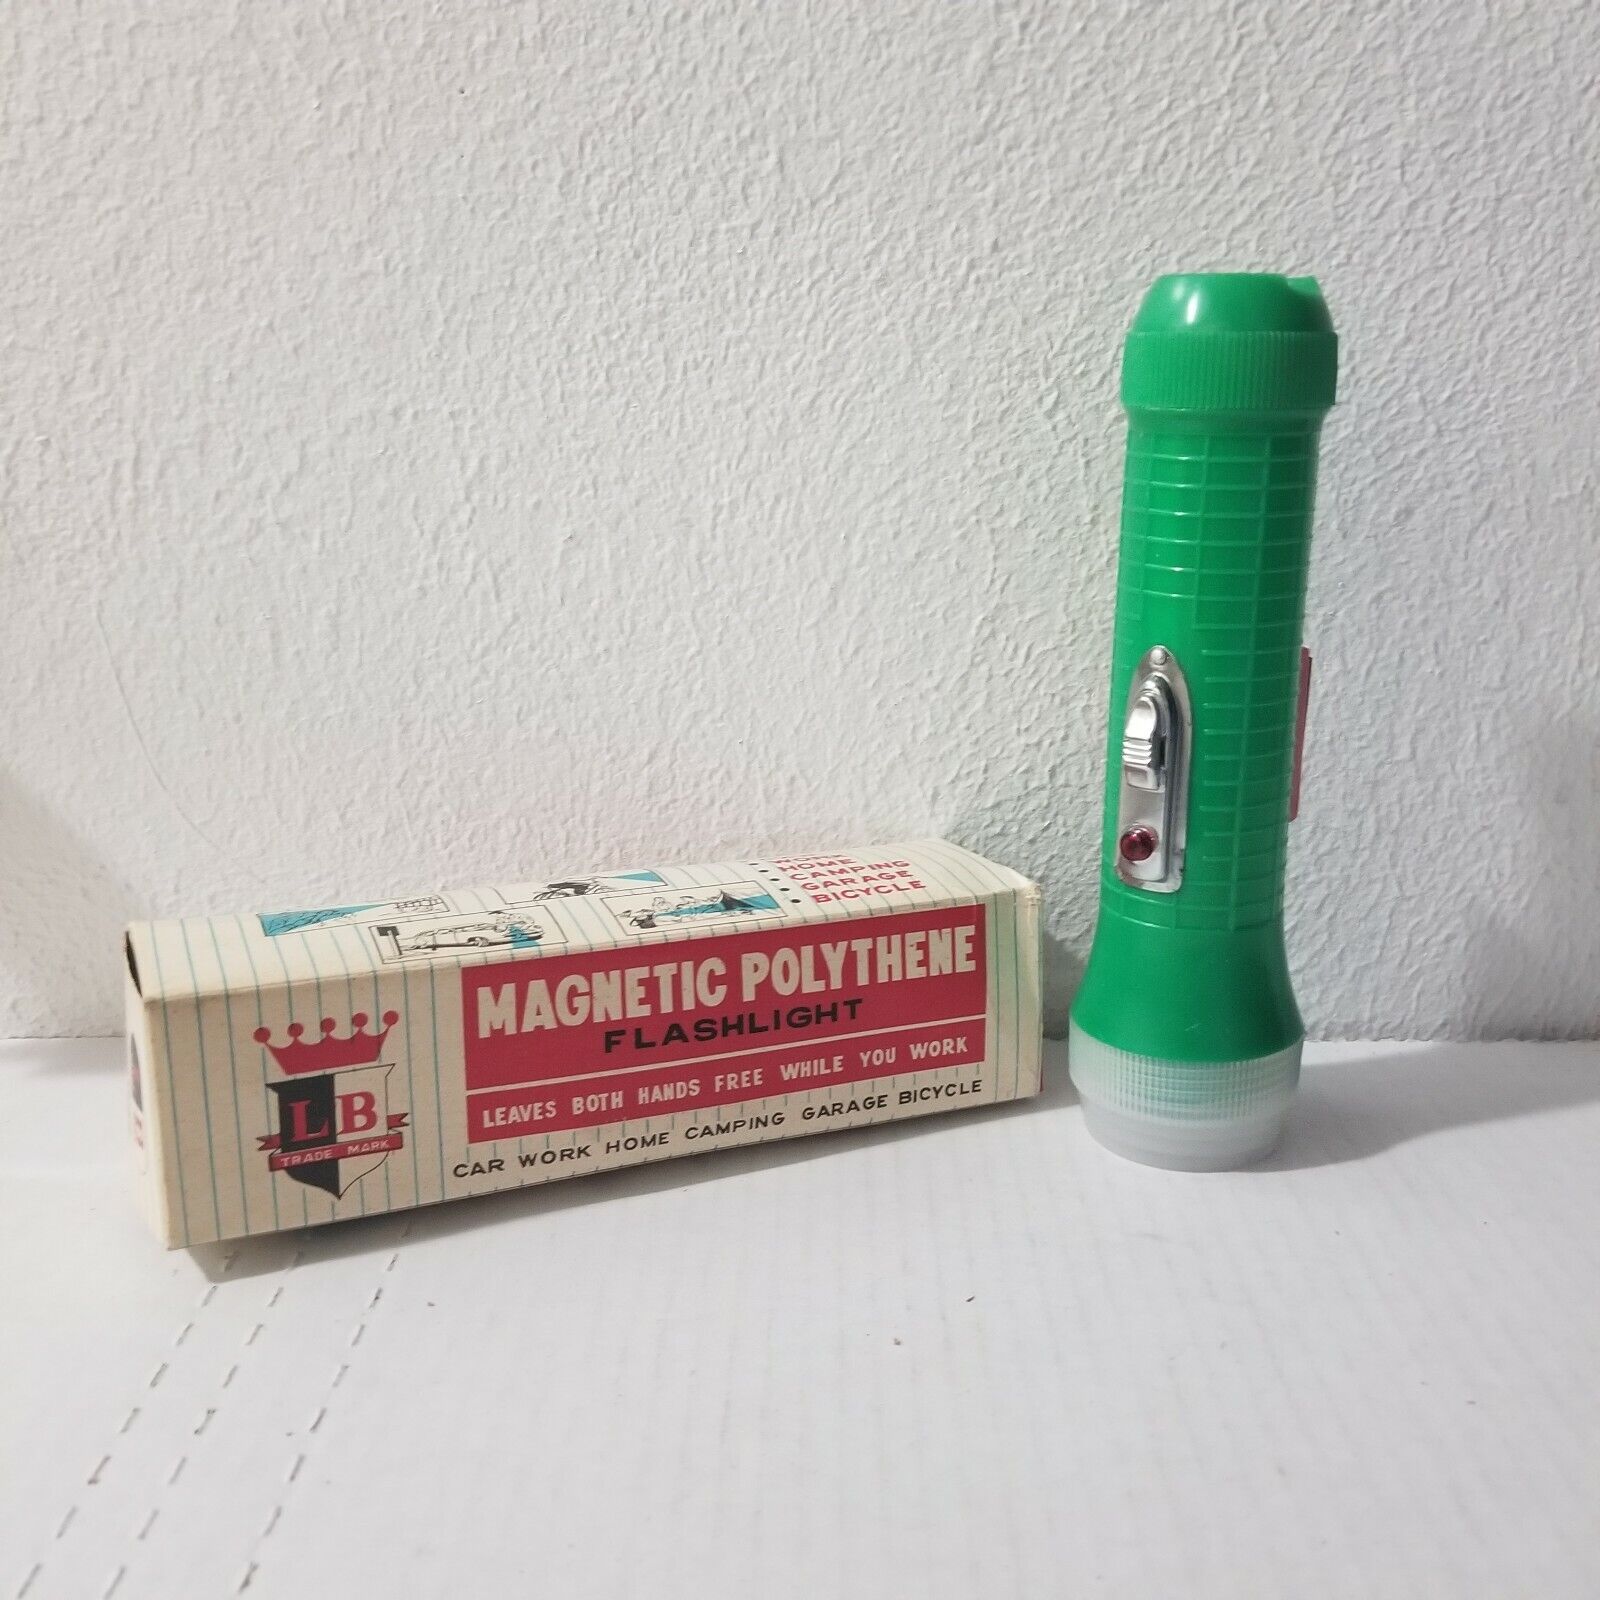 Vintage 60s Magnetic Polythene Flashlight NOS New in Box GREEN LB Trademark HK